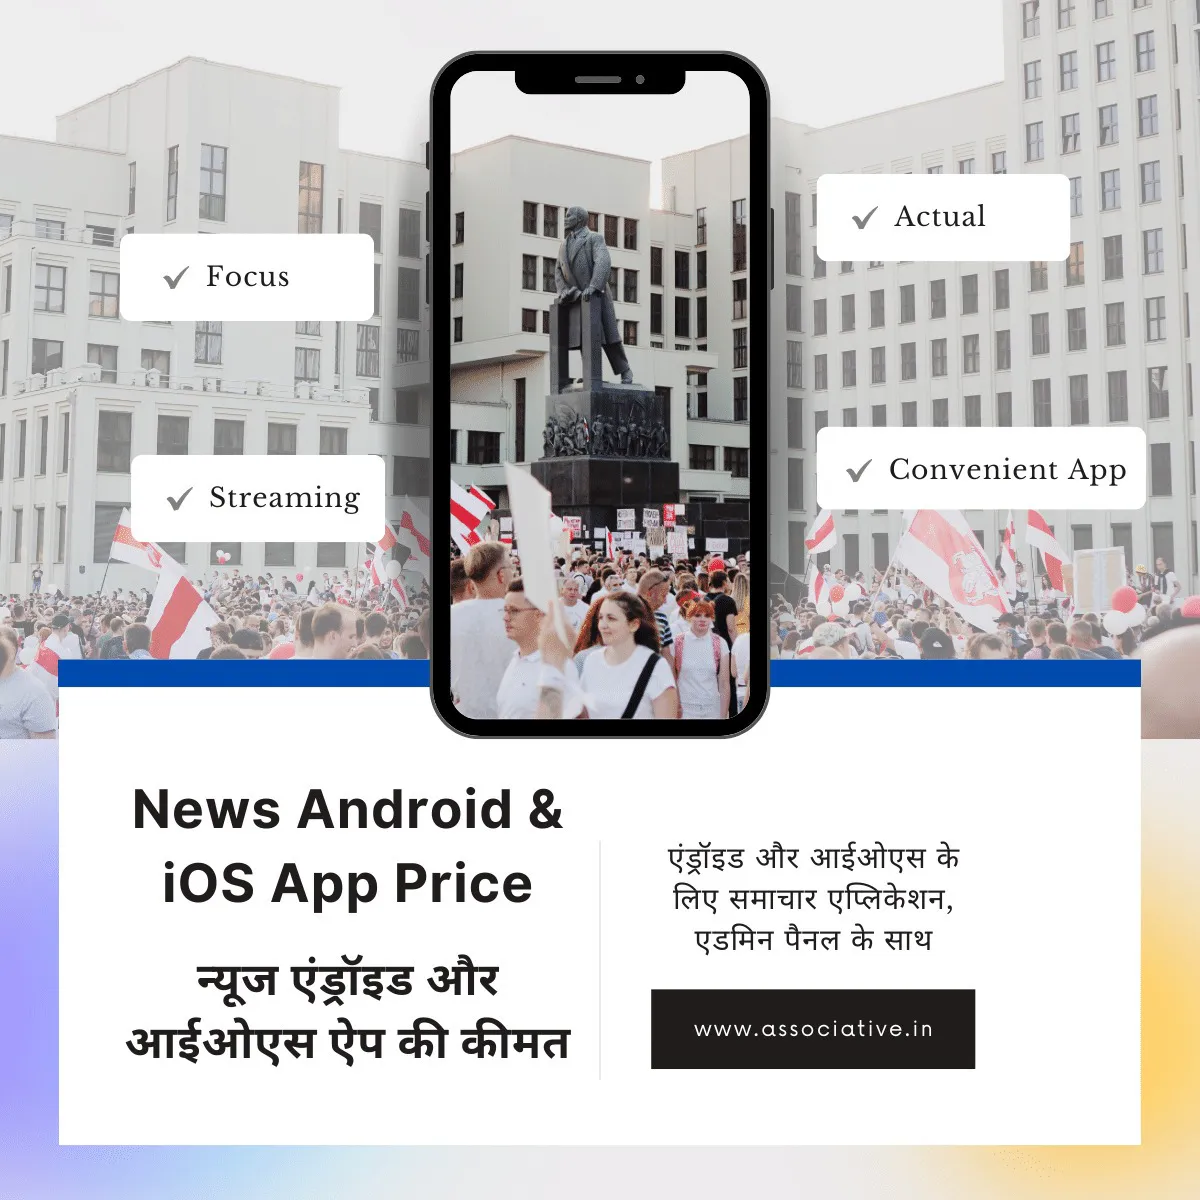 News Android & iOS App